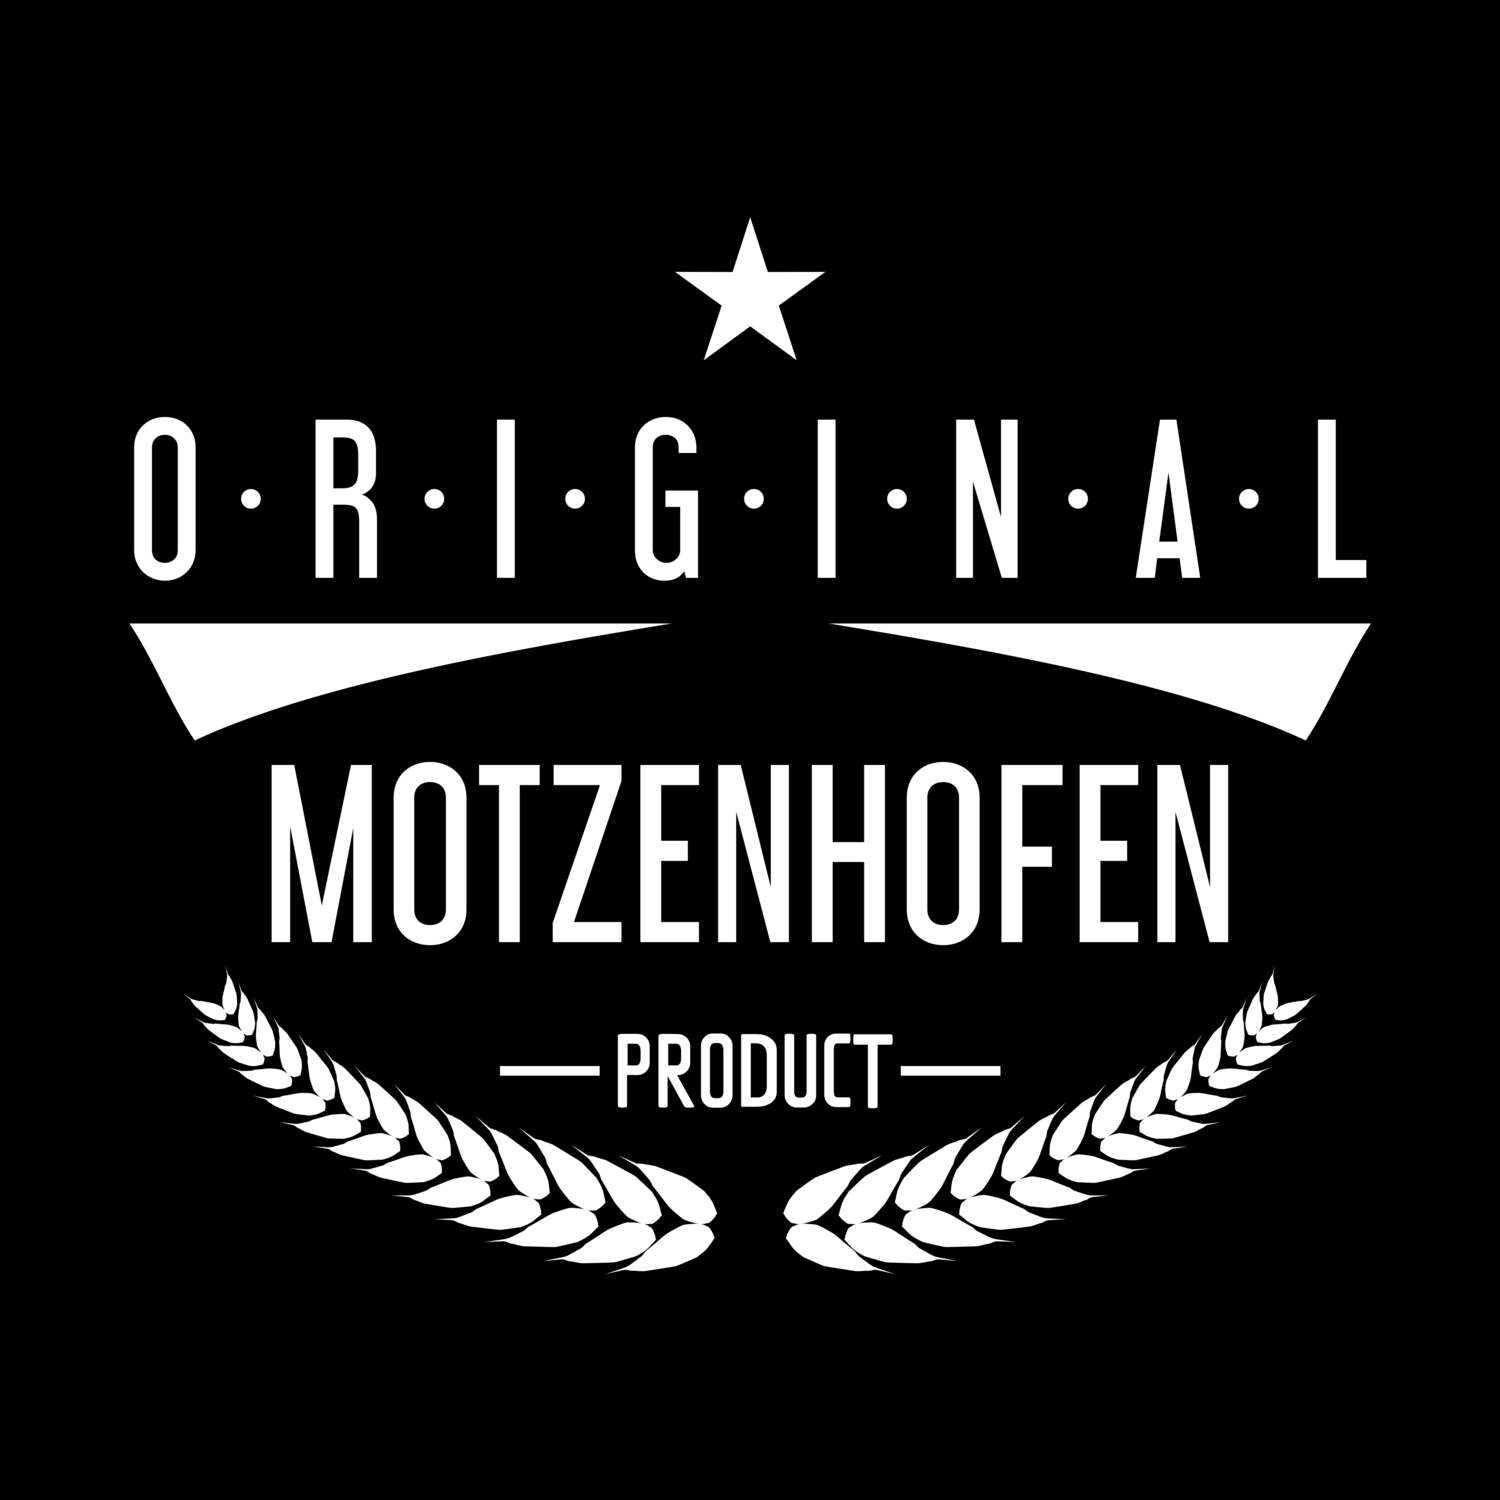 Motzenhofen T-Shirt »Original Product«